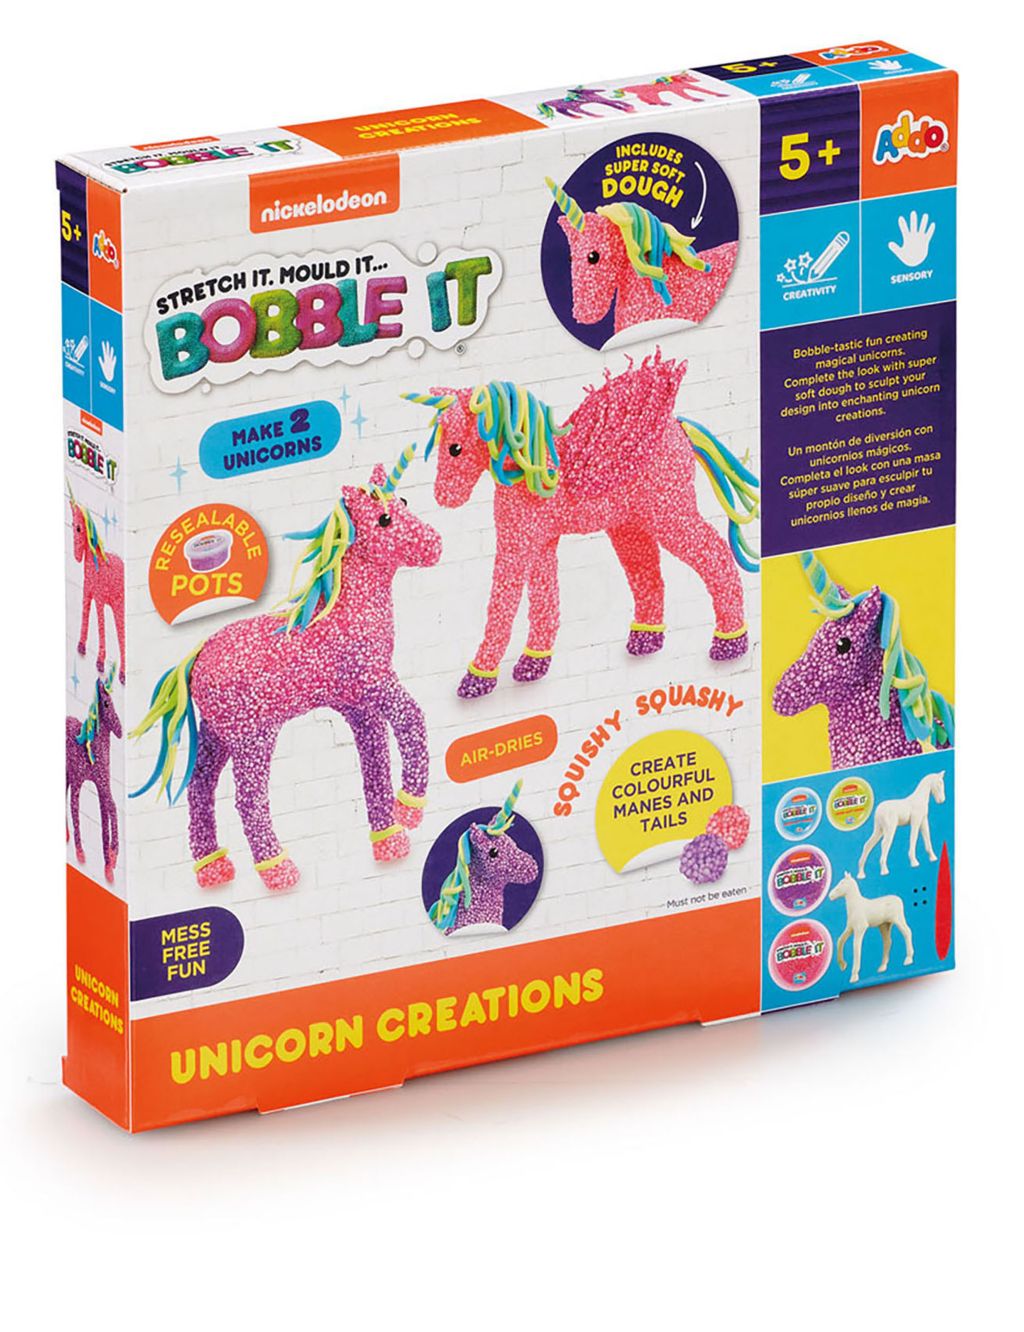 Nickelodeon Bobble It Unicorn Creations image 1